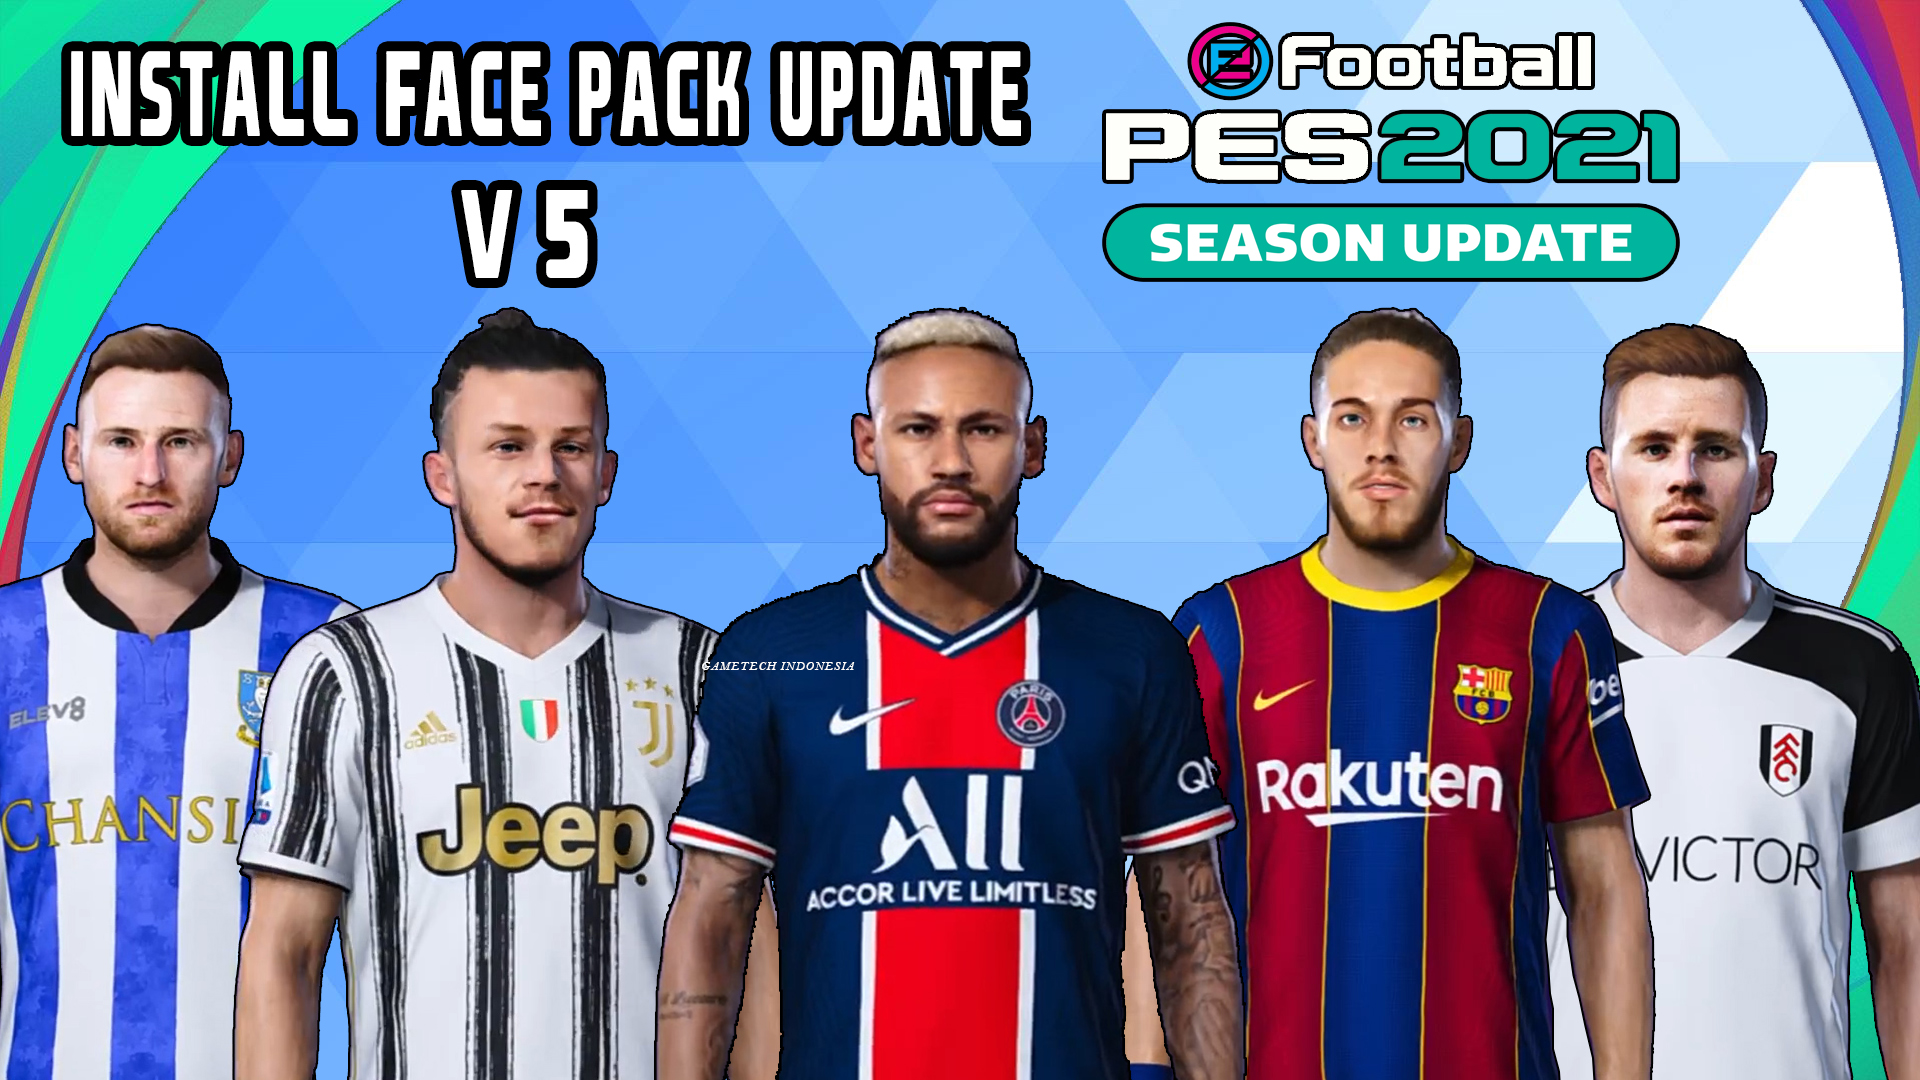 PES 2020 Seasons update. PES 2021 Manager Facepack. PES 2017 Juventus Facepack 2023. PES 2017 Juventus Facepack 2021. Seasons 2020